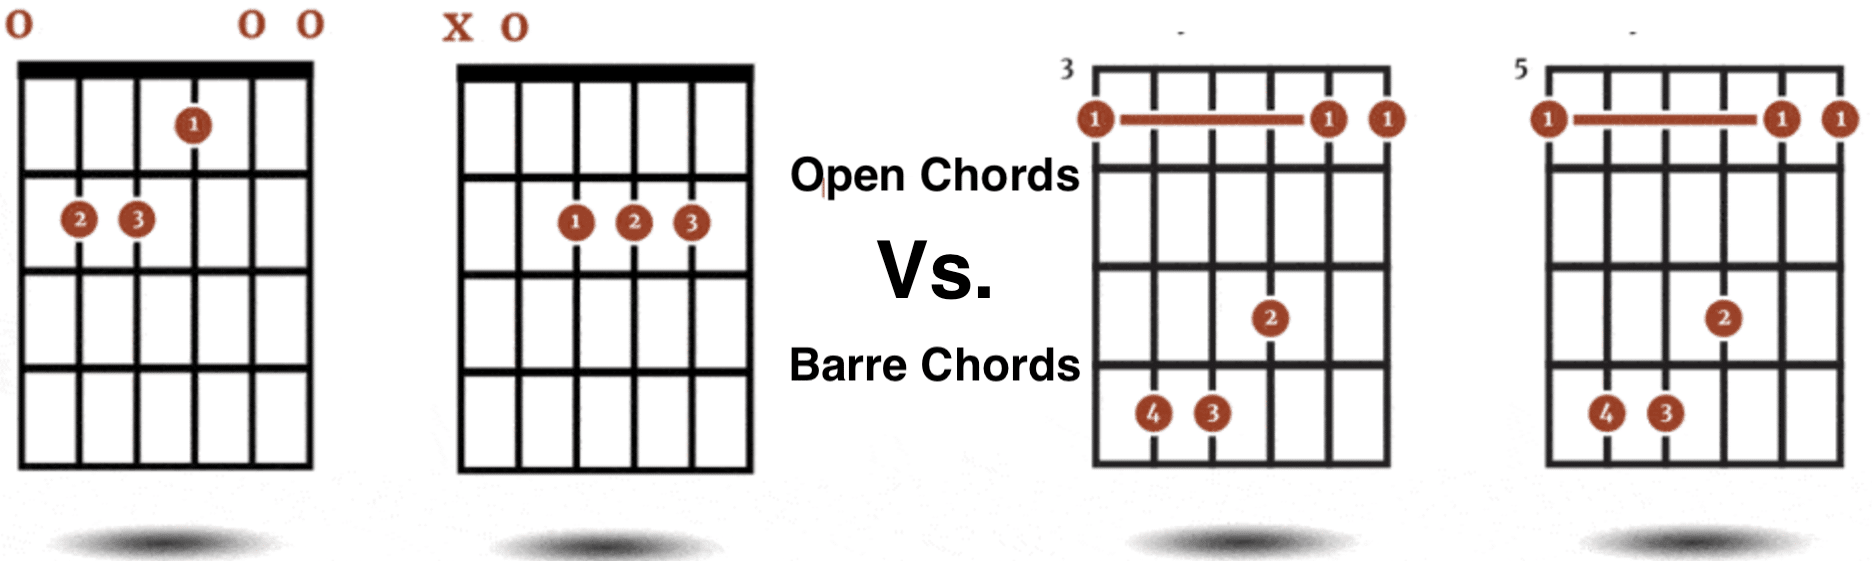 Open Chords vs Barre Chords 1 e1697233456742 - Unison